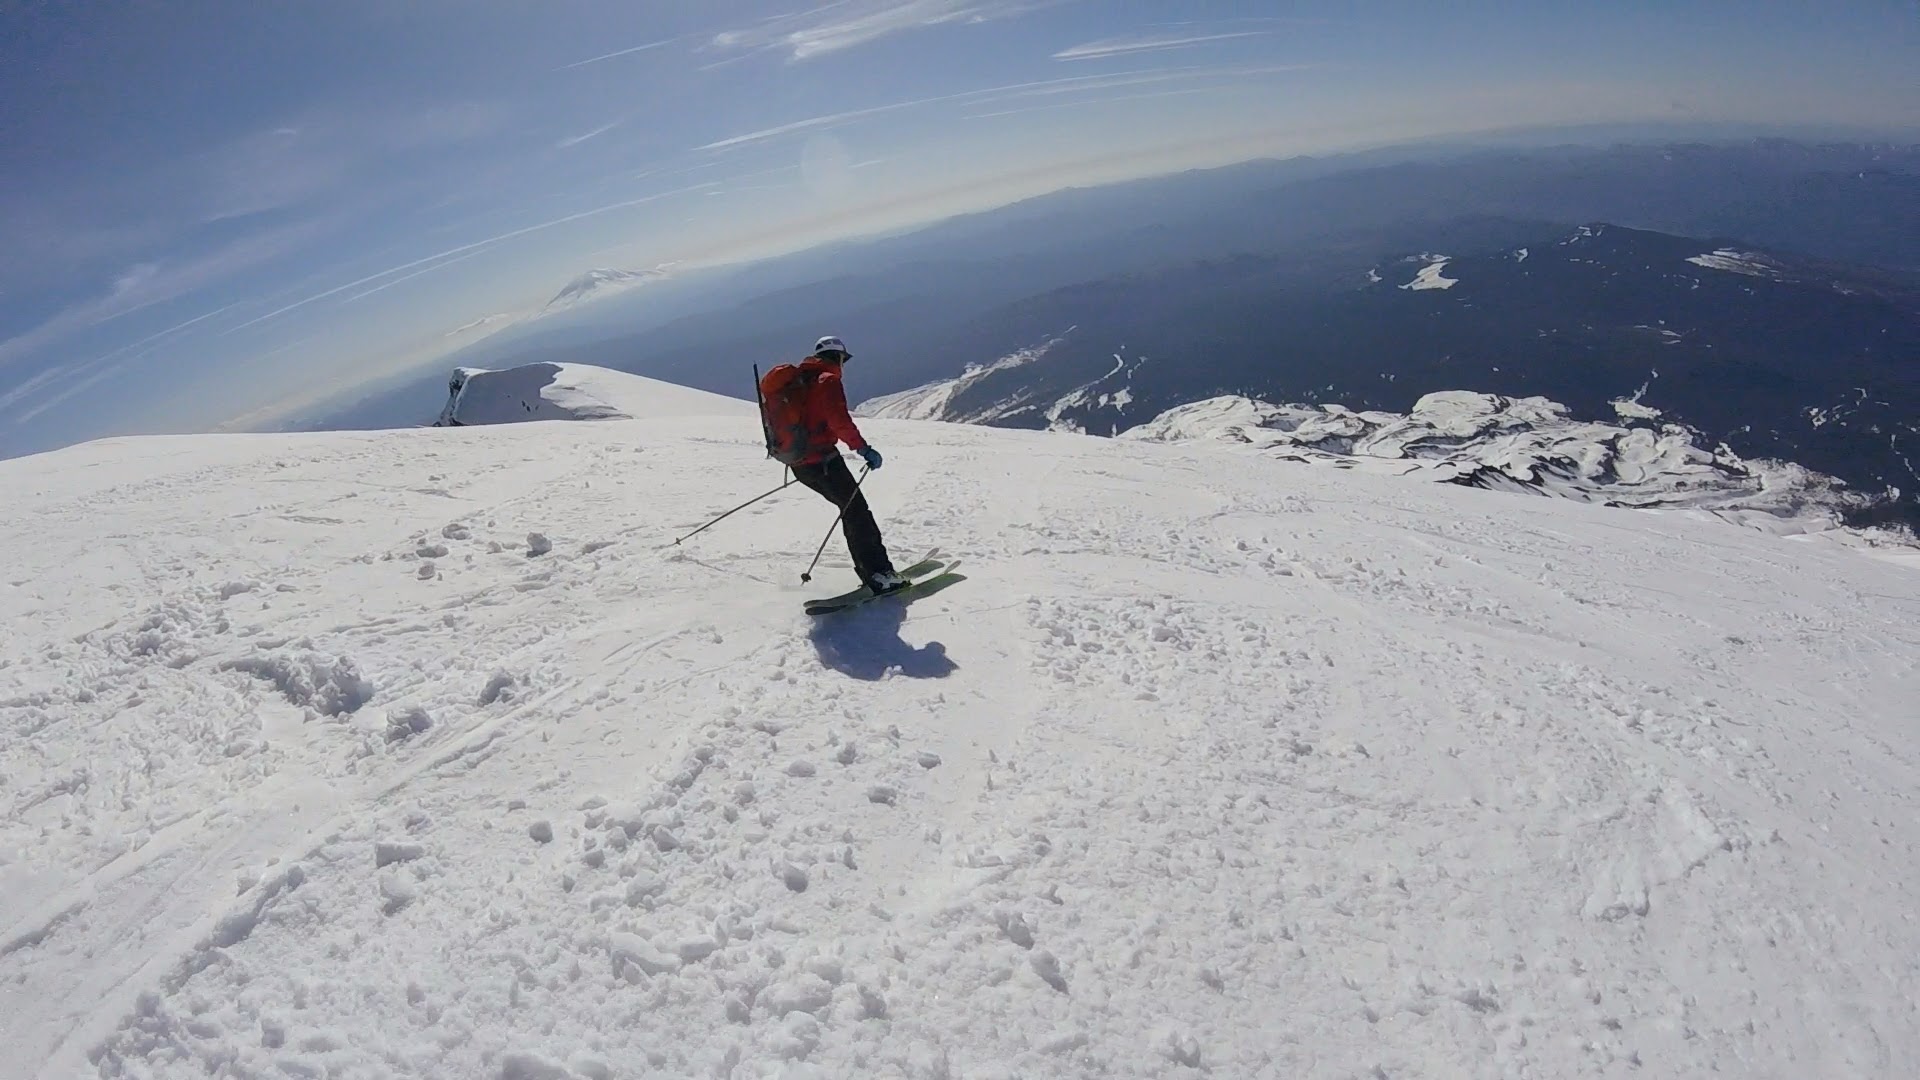 Skiing off the Summit of Mt. St. Helens, Washington